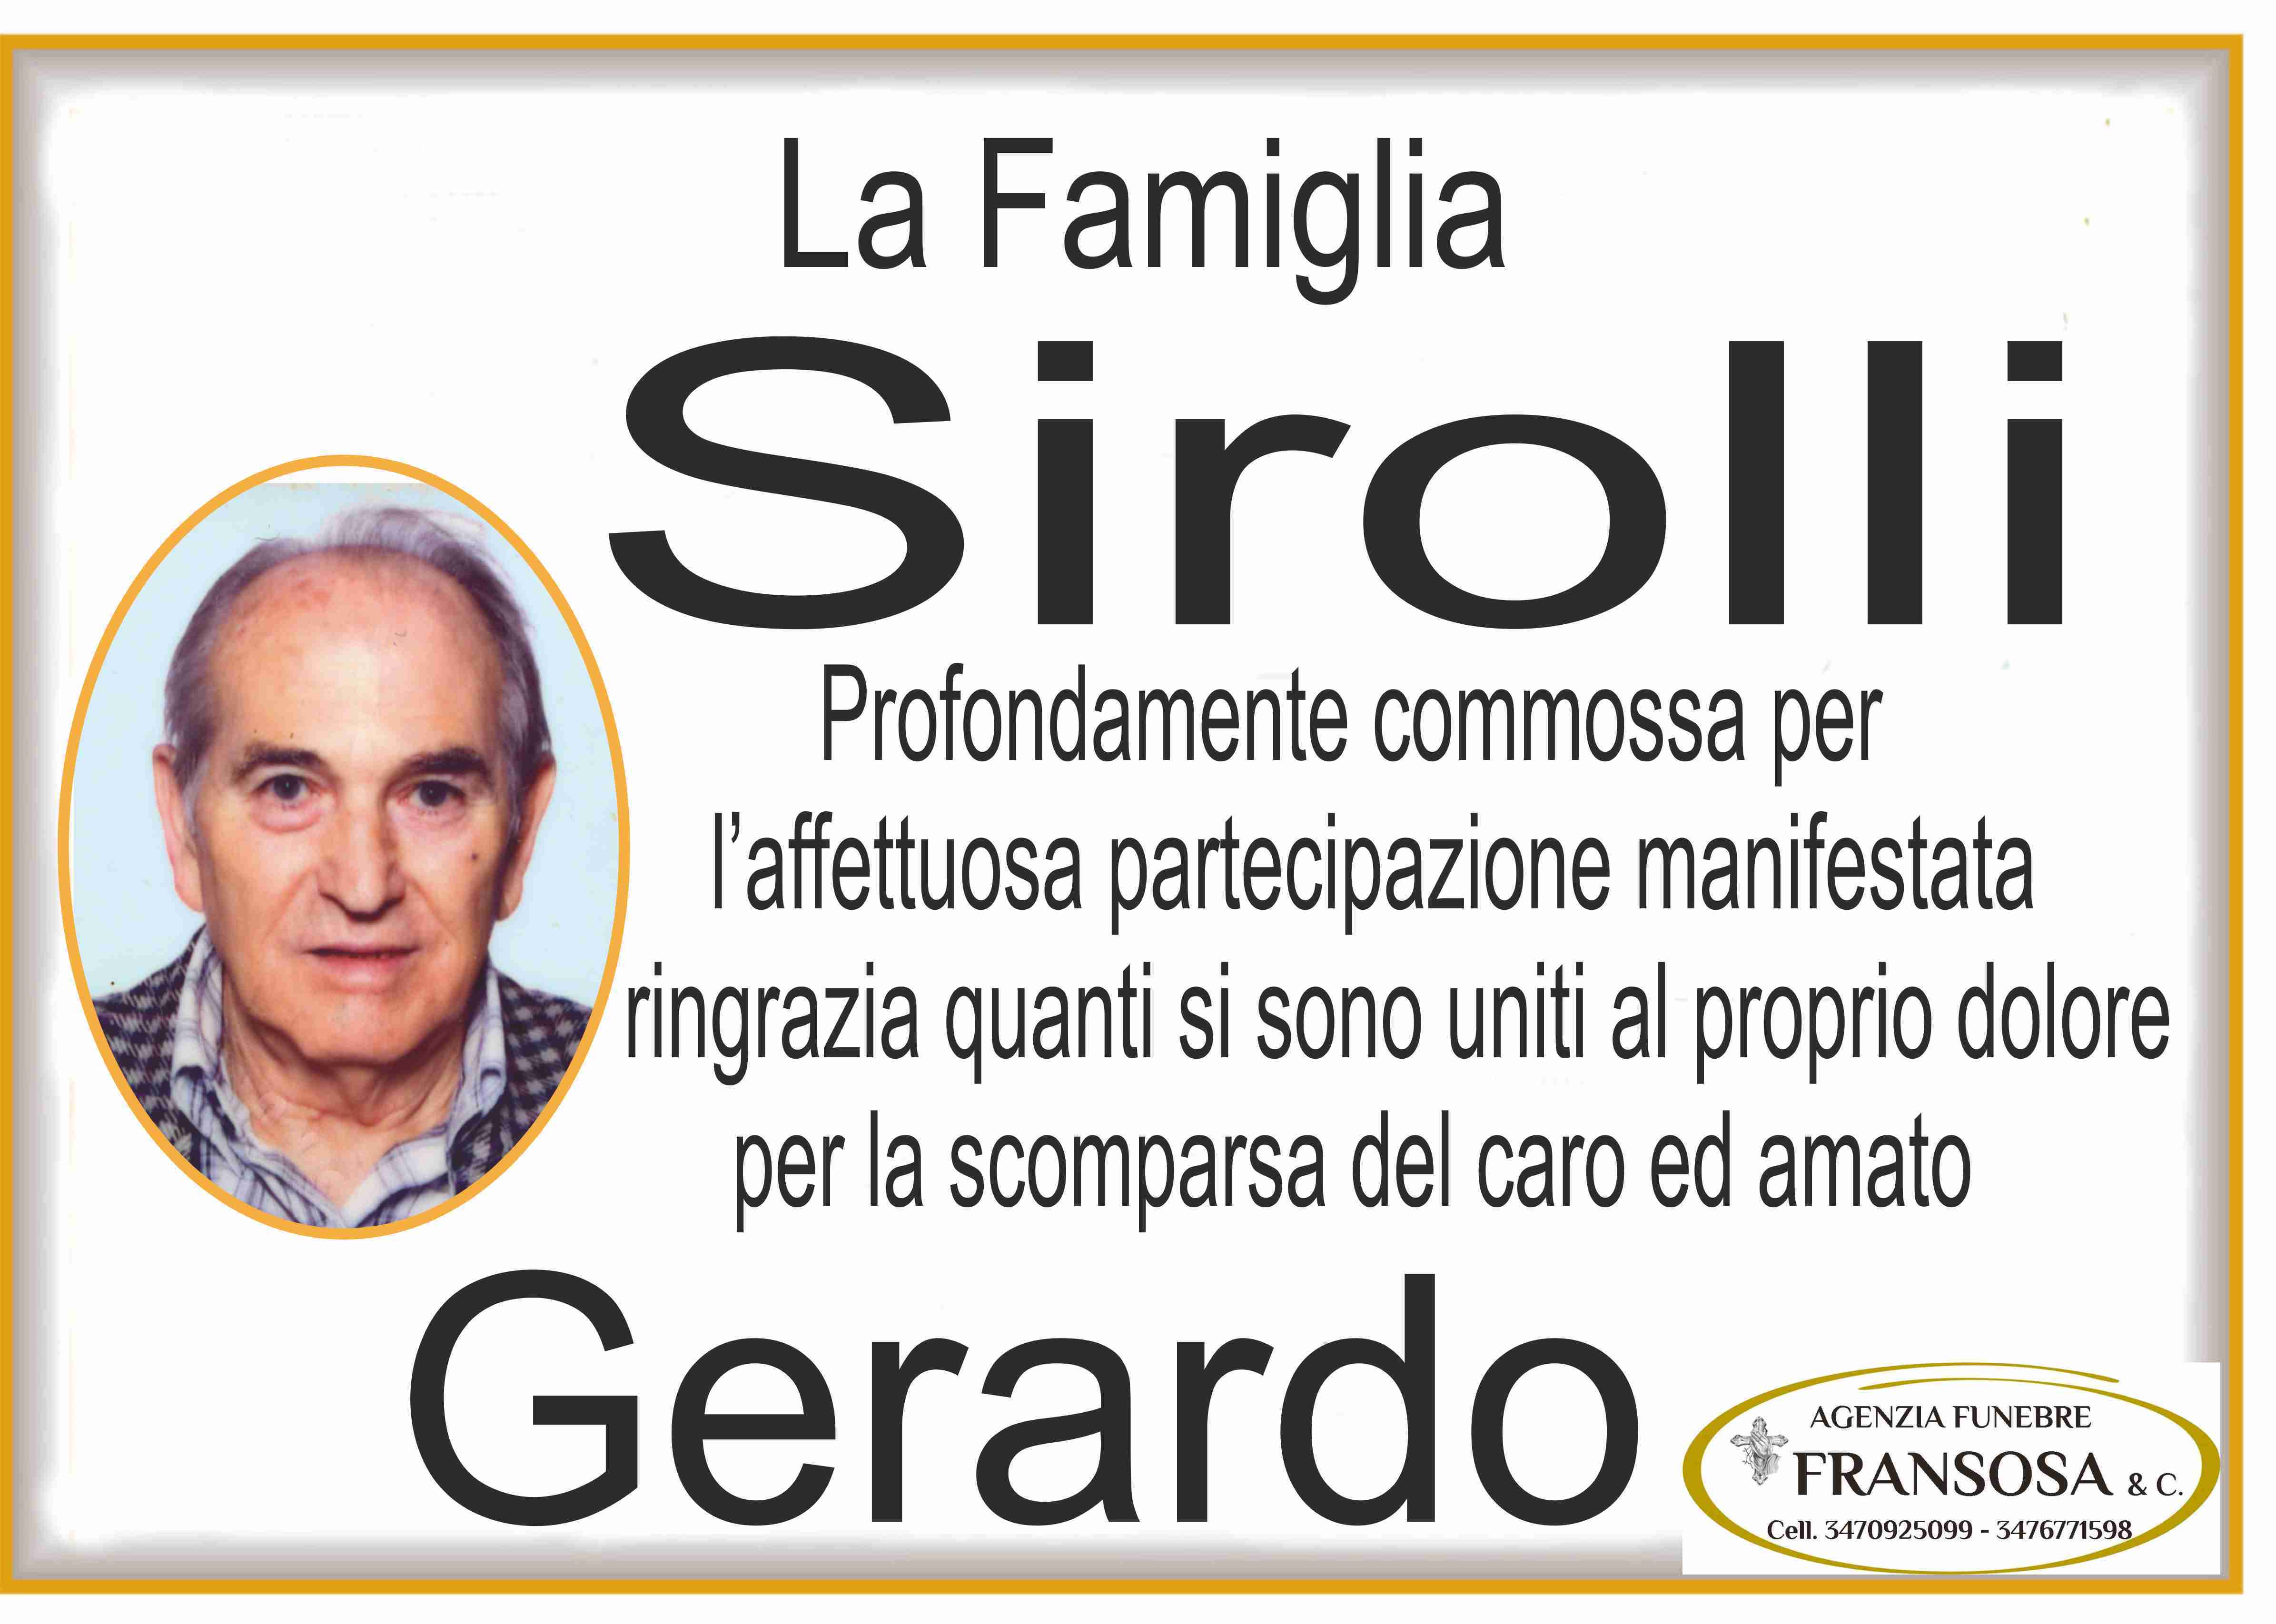 Gerardo Sirolli